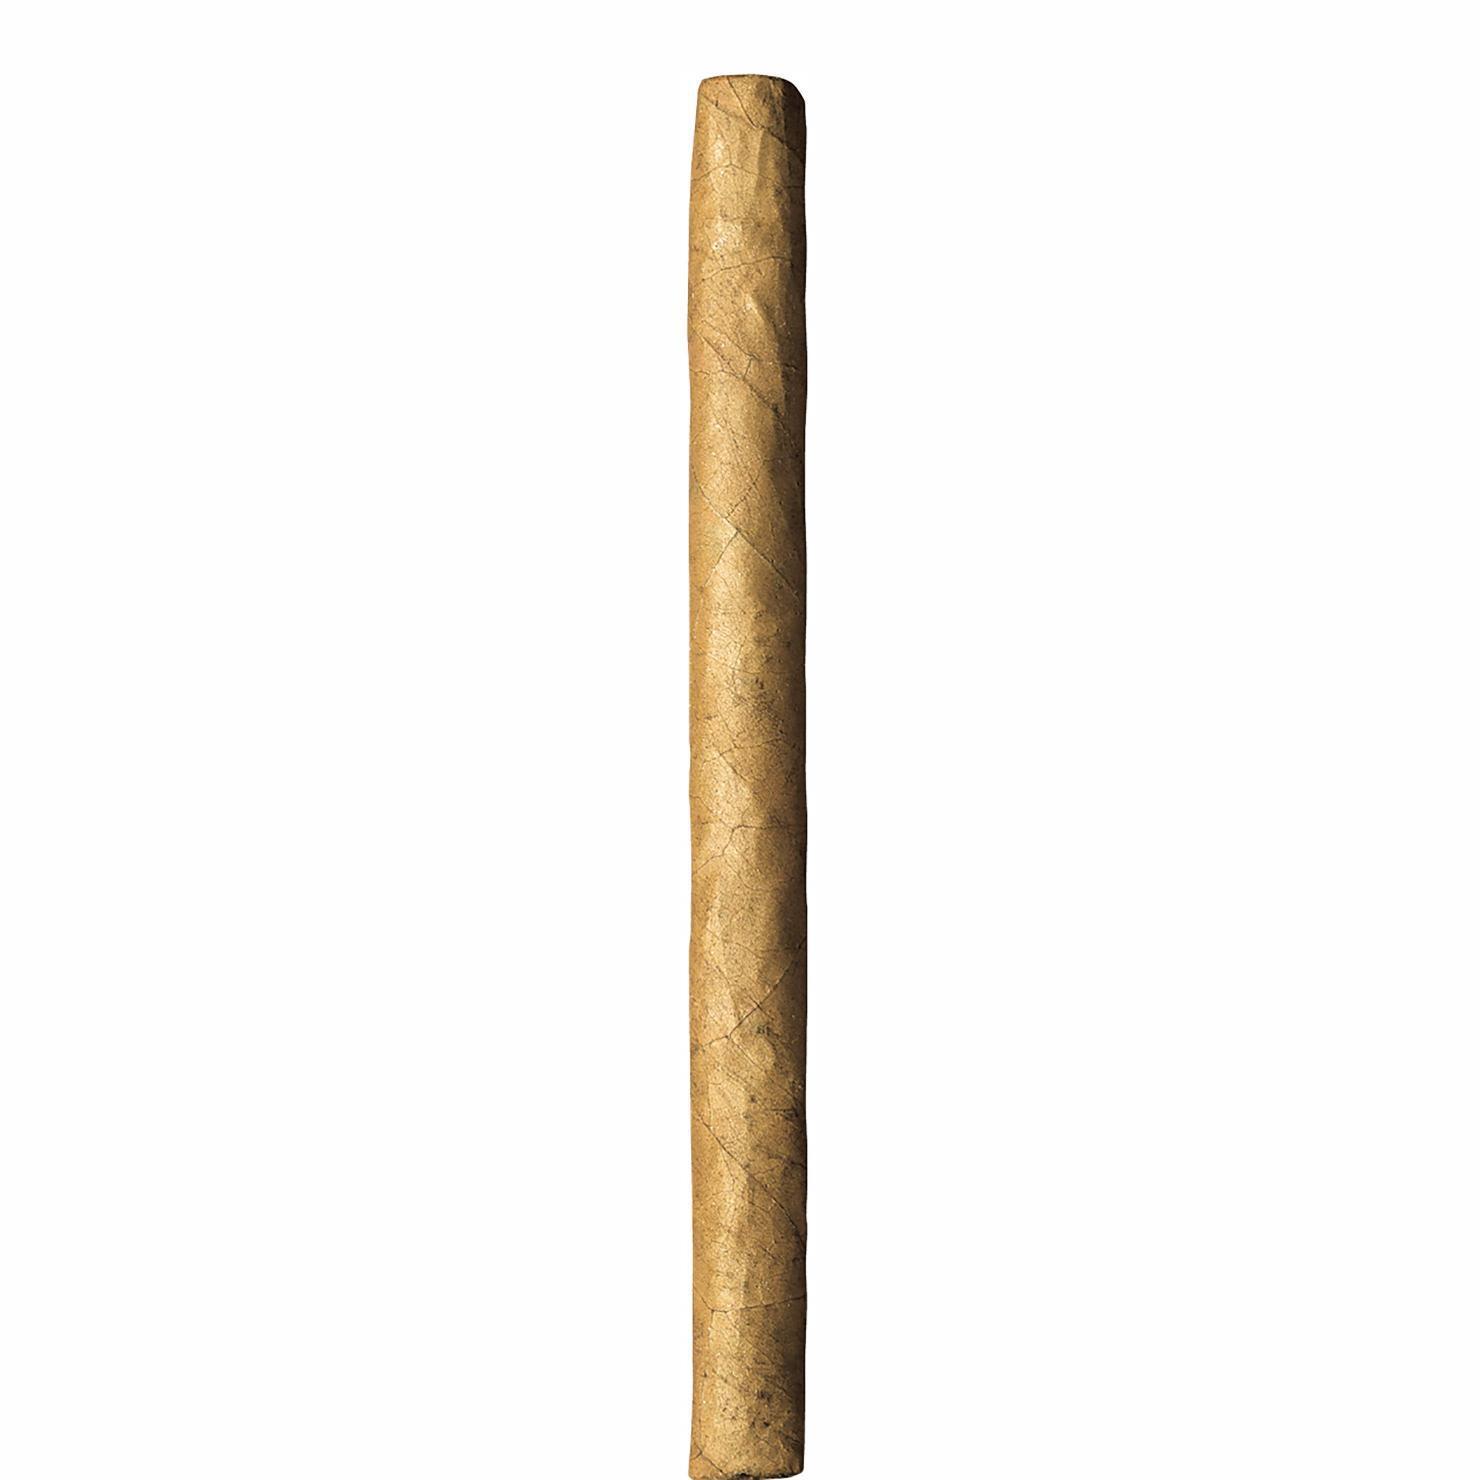 Villiger Premium Nr. 10 Sumatra  10 x 20 Zigarillos